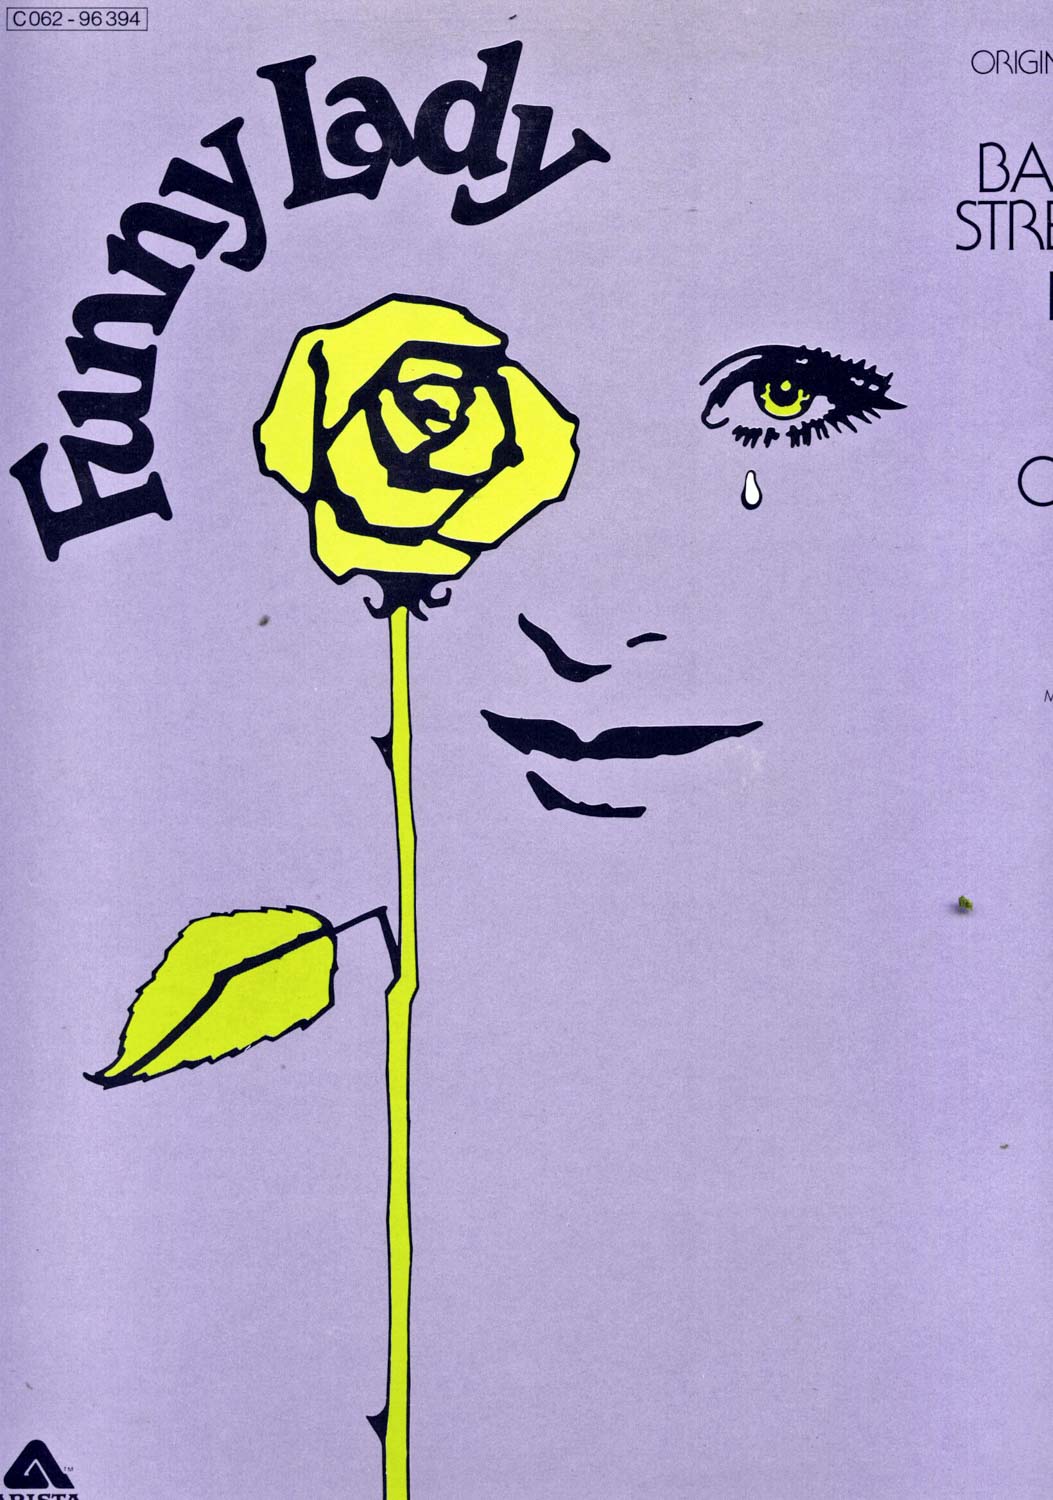 Barbara Streisand  Funny Lady. Original Soundtrack Recording (C 062-96394)  *LP 12'' (Vinyl)*. 